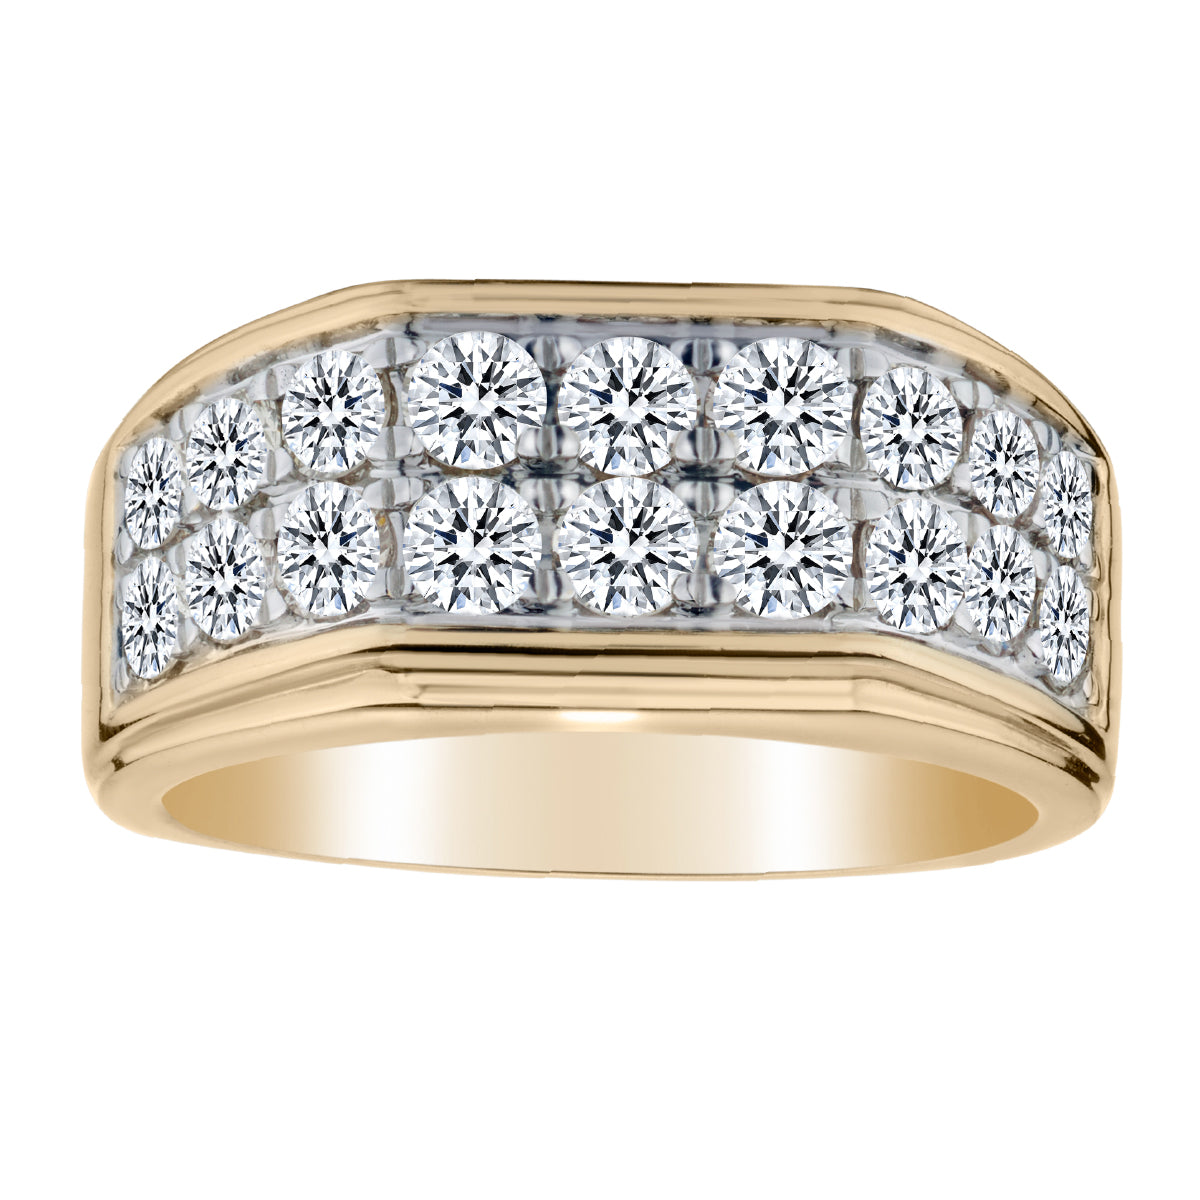 2.00 Carat Heavy Diamond Gentleman's Ring, 10kt Yellow Gold.....................NOW